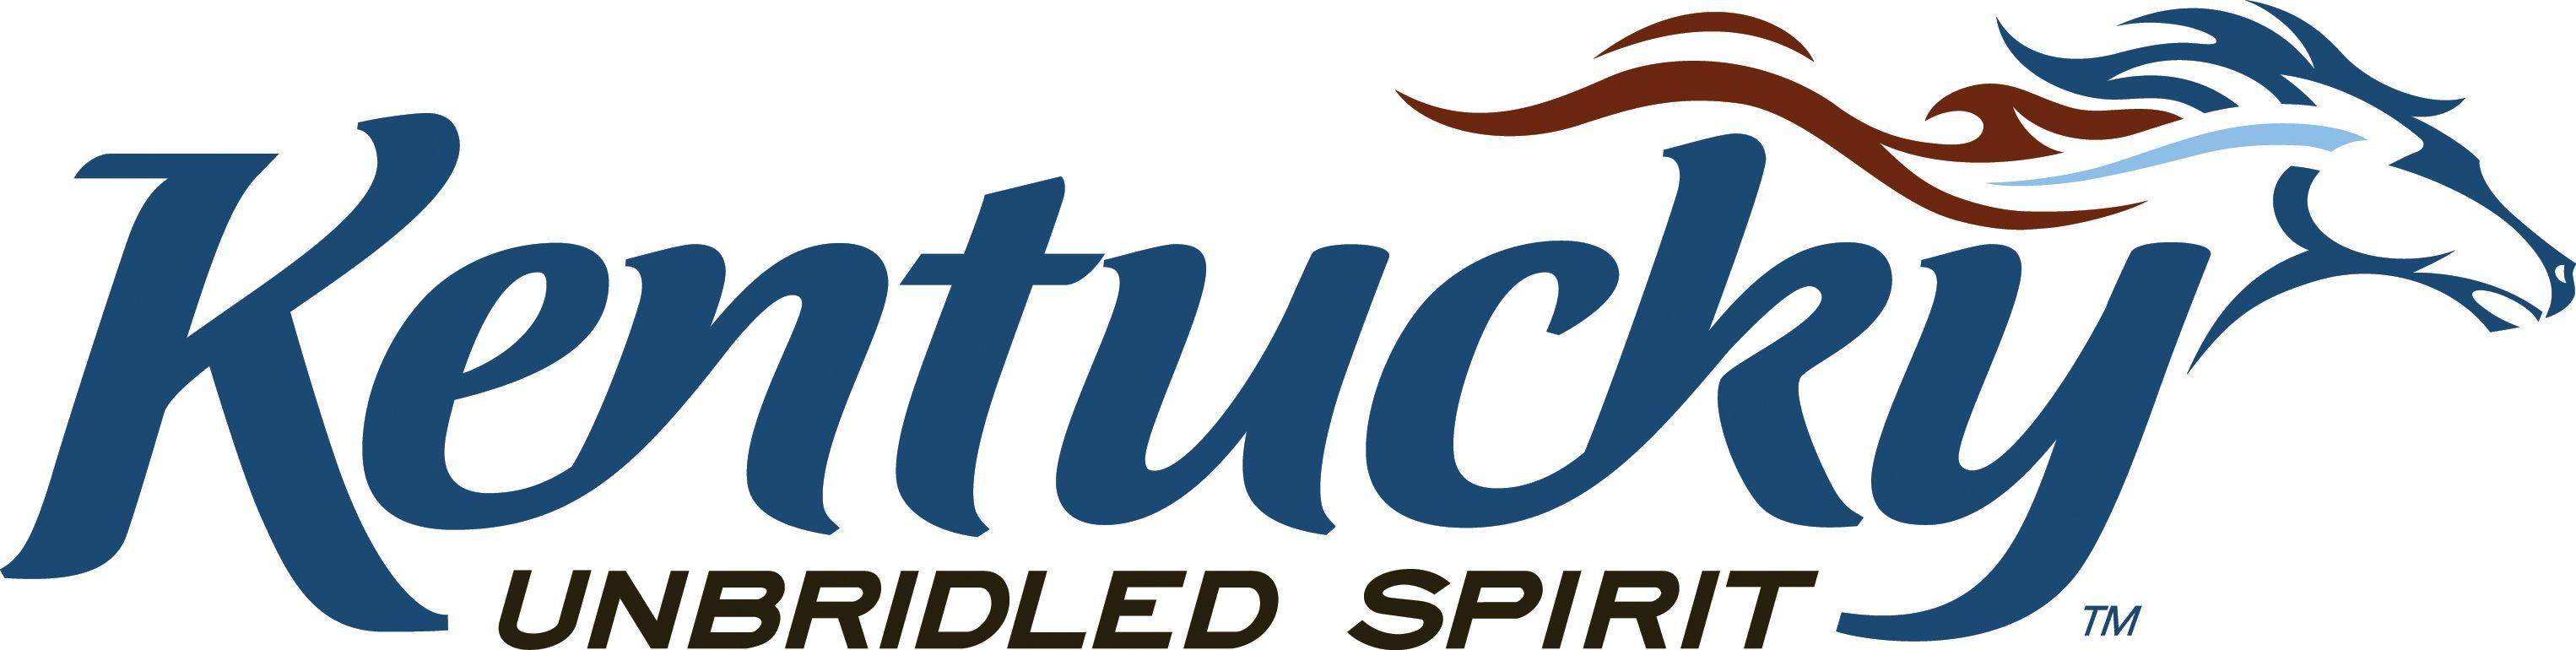 KY Logo - Kentucky Unbridled Spirit Logo Use